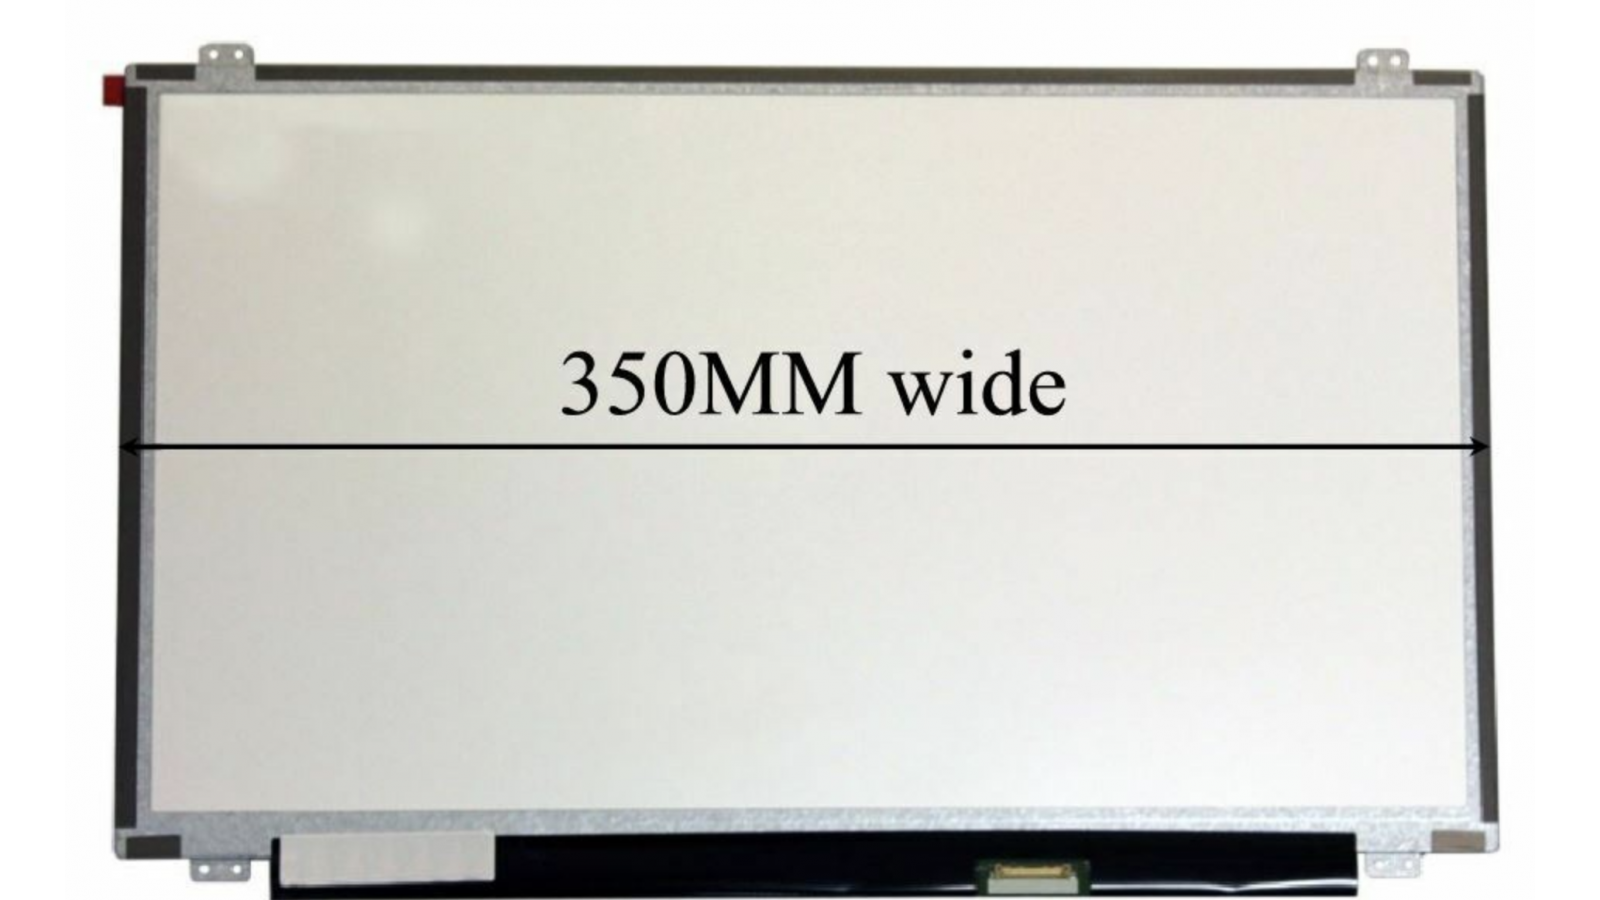 Display LCD Schermo 15,6 Led N156HGA-EA3 REV.C2 Full Hd 350MM connettore 30 pin